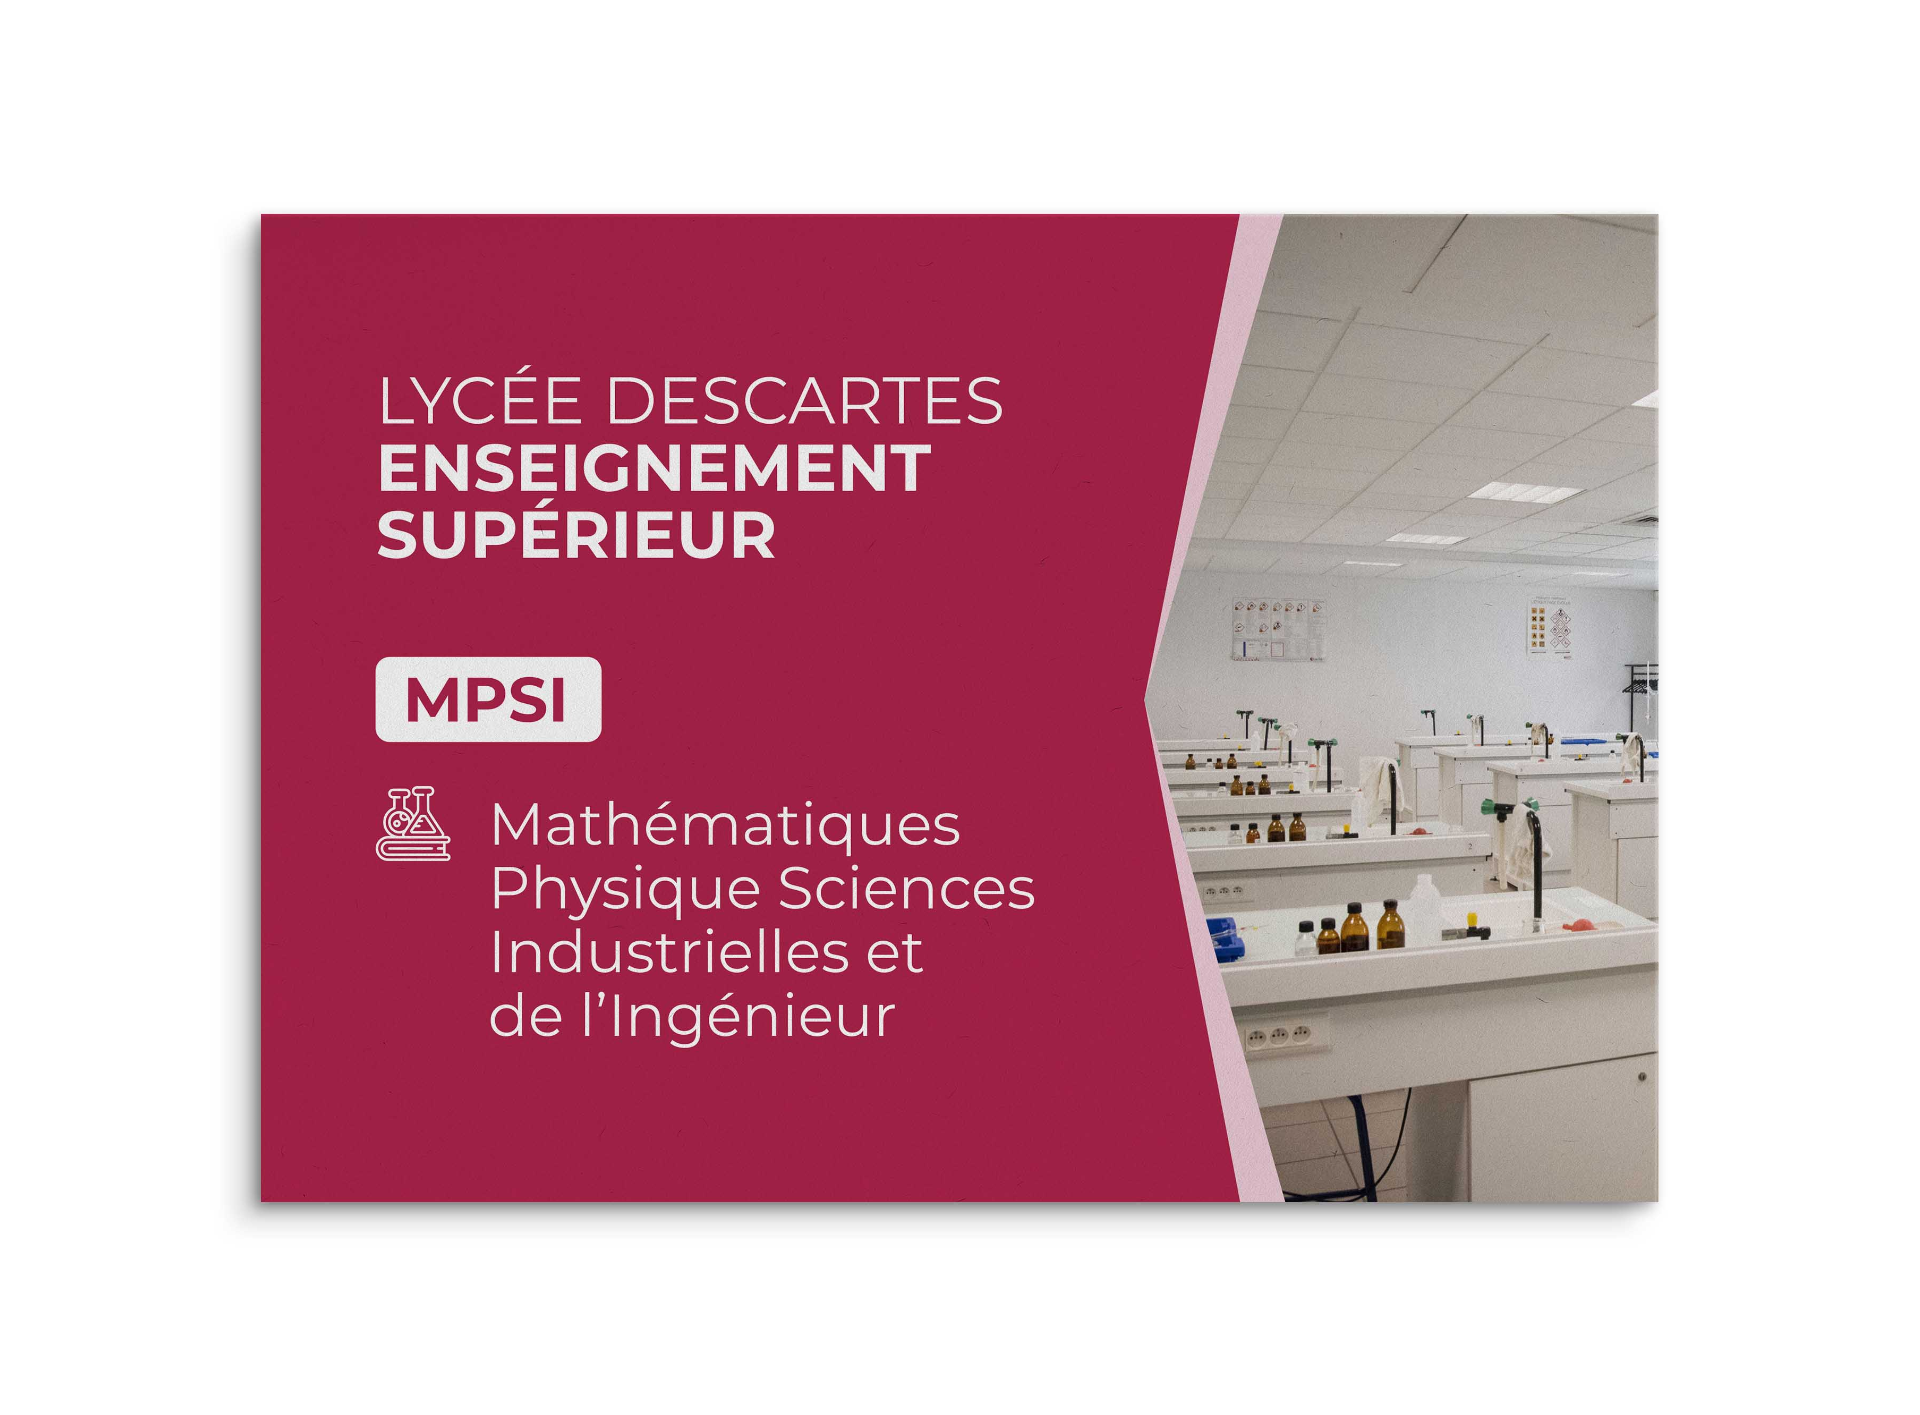 Image-edition-logo-Lycee-Descartes-France-agence-conseil-en-communication-Letb-synergie